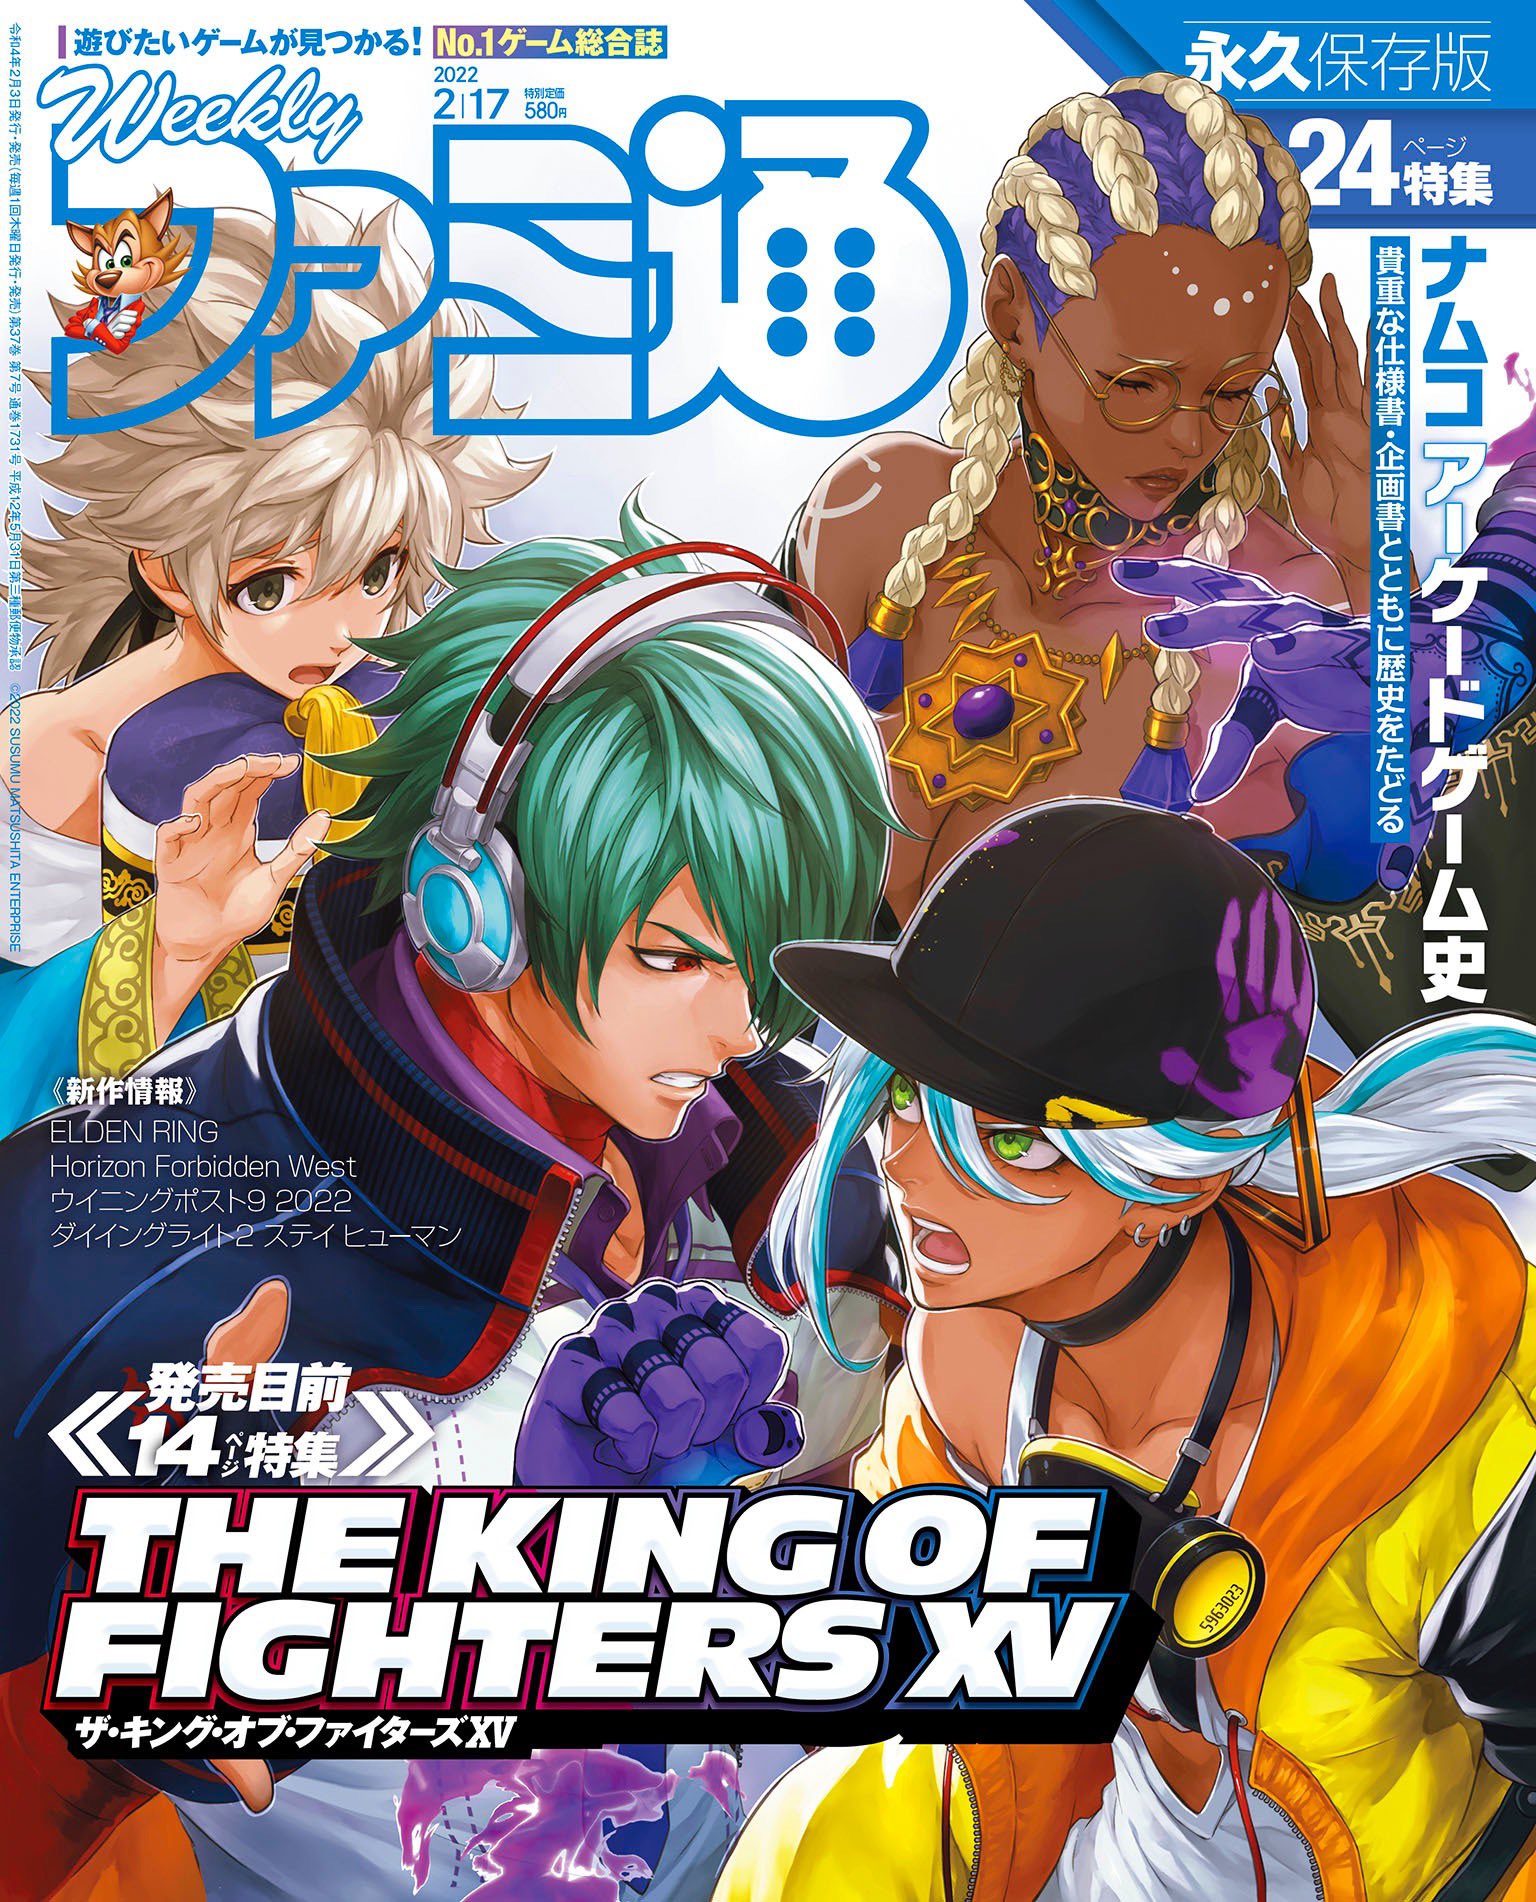 February 17th Famitsu cover